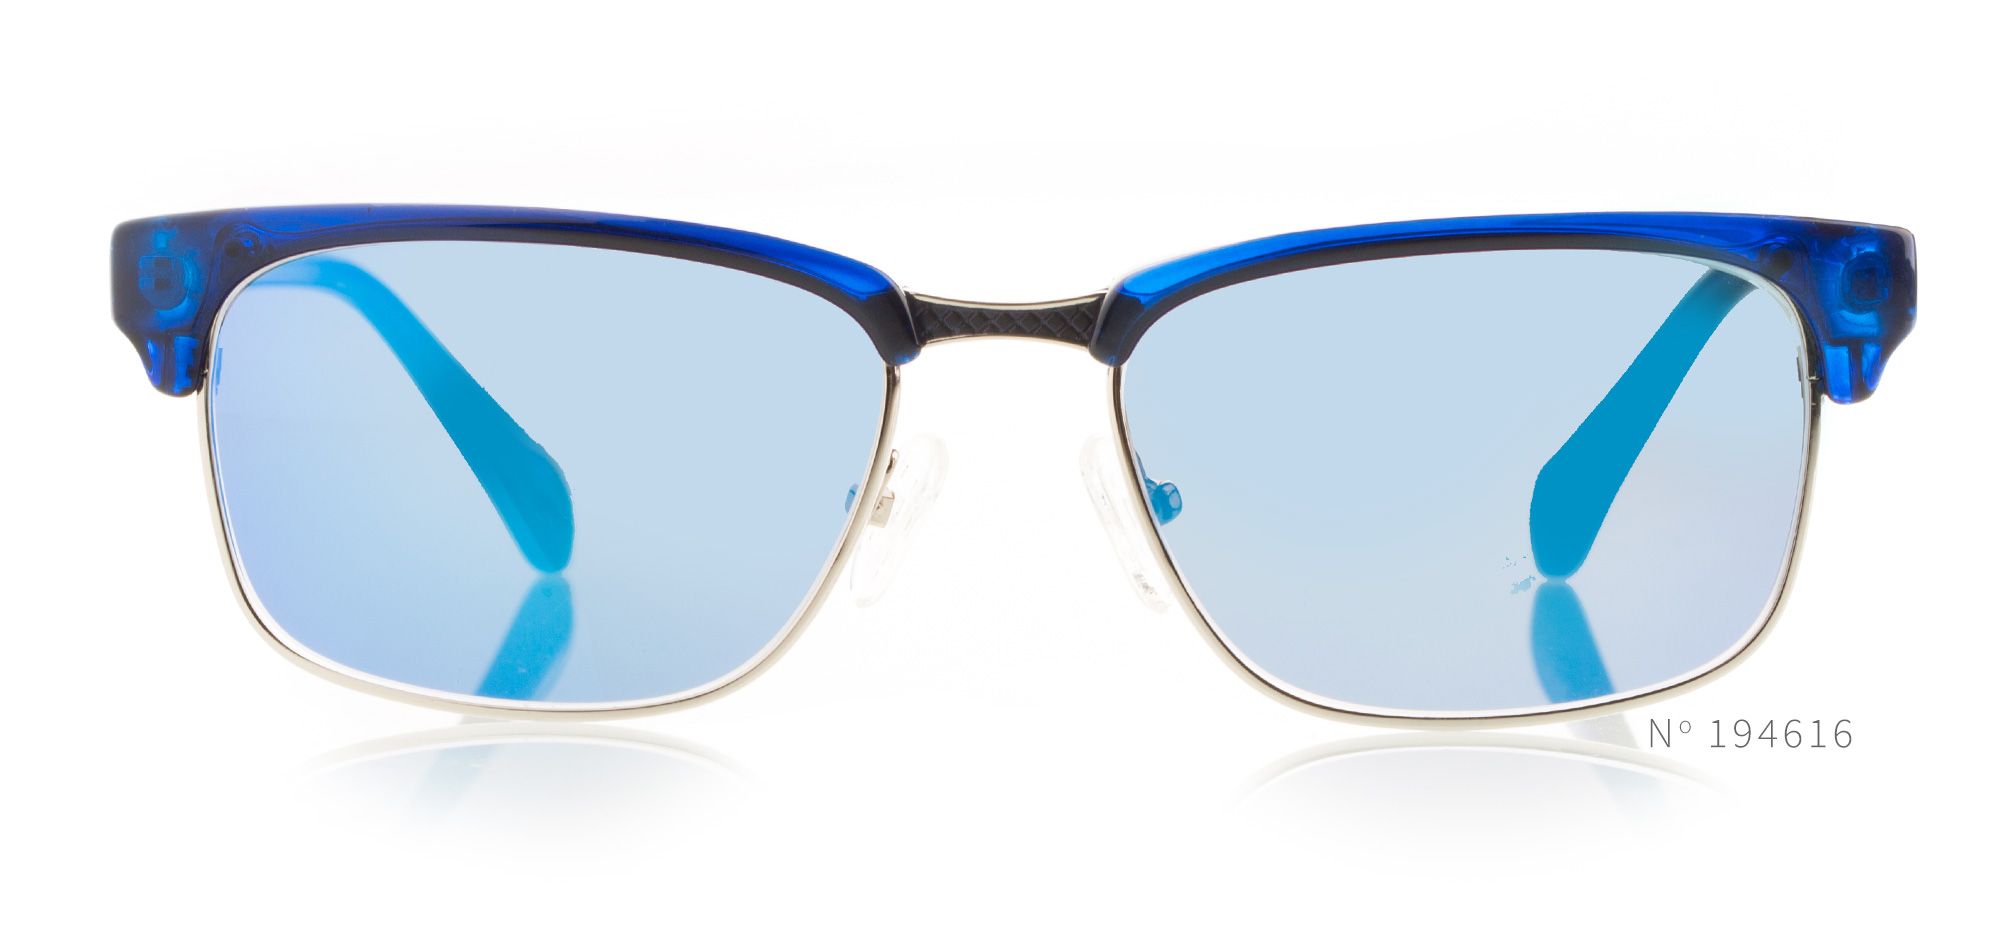 blue-browline-sunglasses-194616